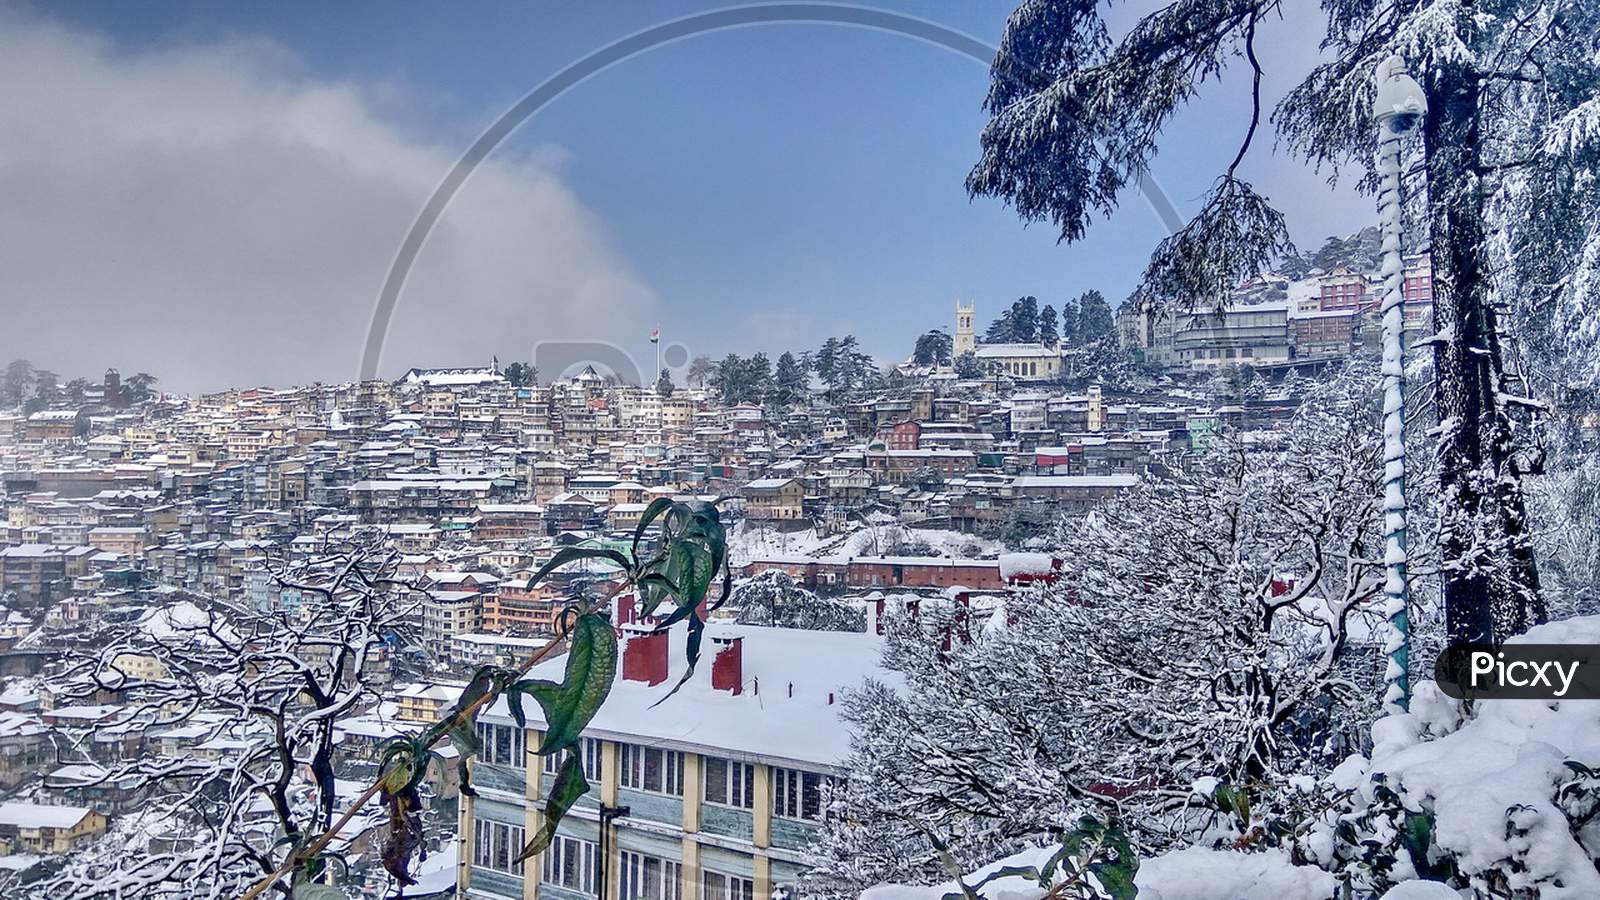 Beautiful ever view of Shimla city during winter season.